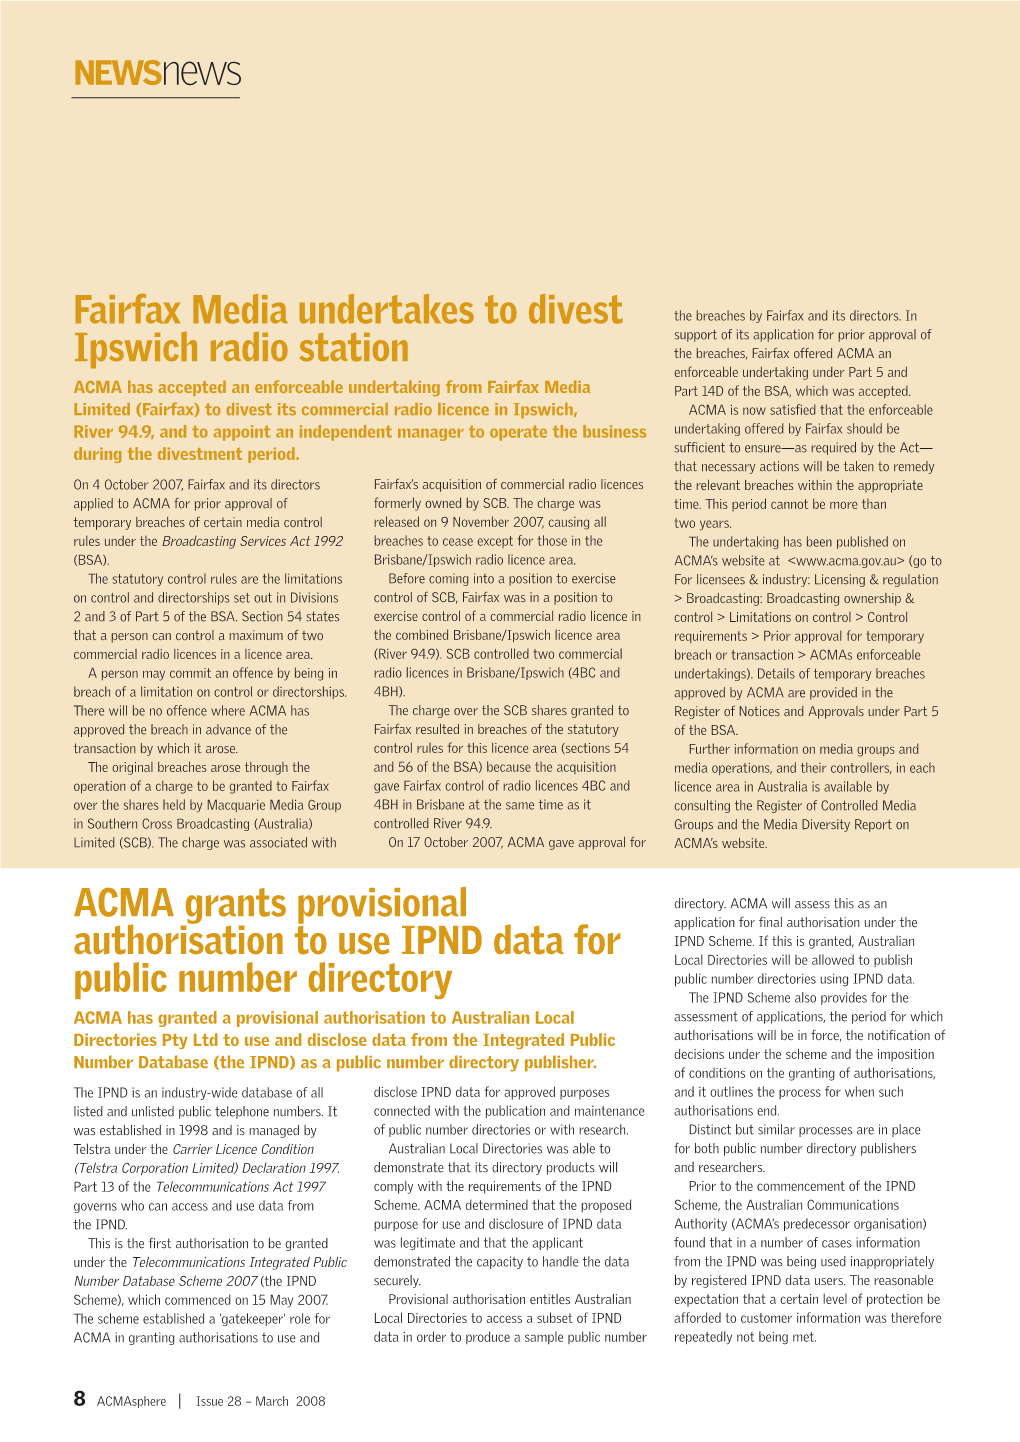 Fairfax Media Undertakes to Divest Ipswich Radio Station ACMA Grants